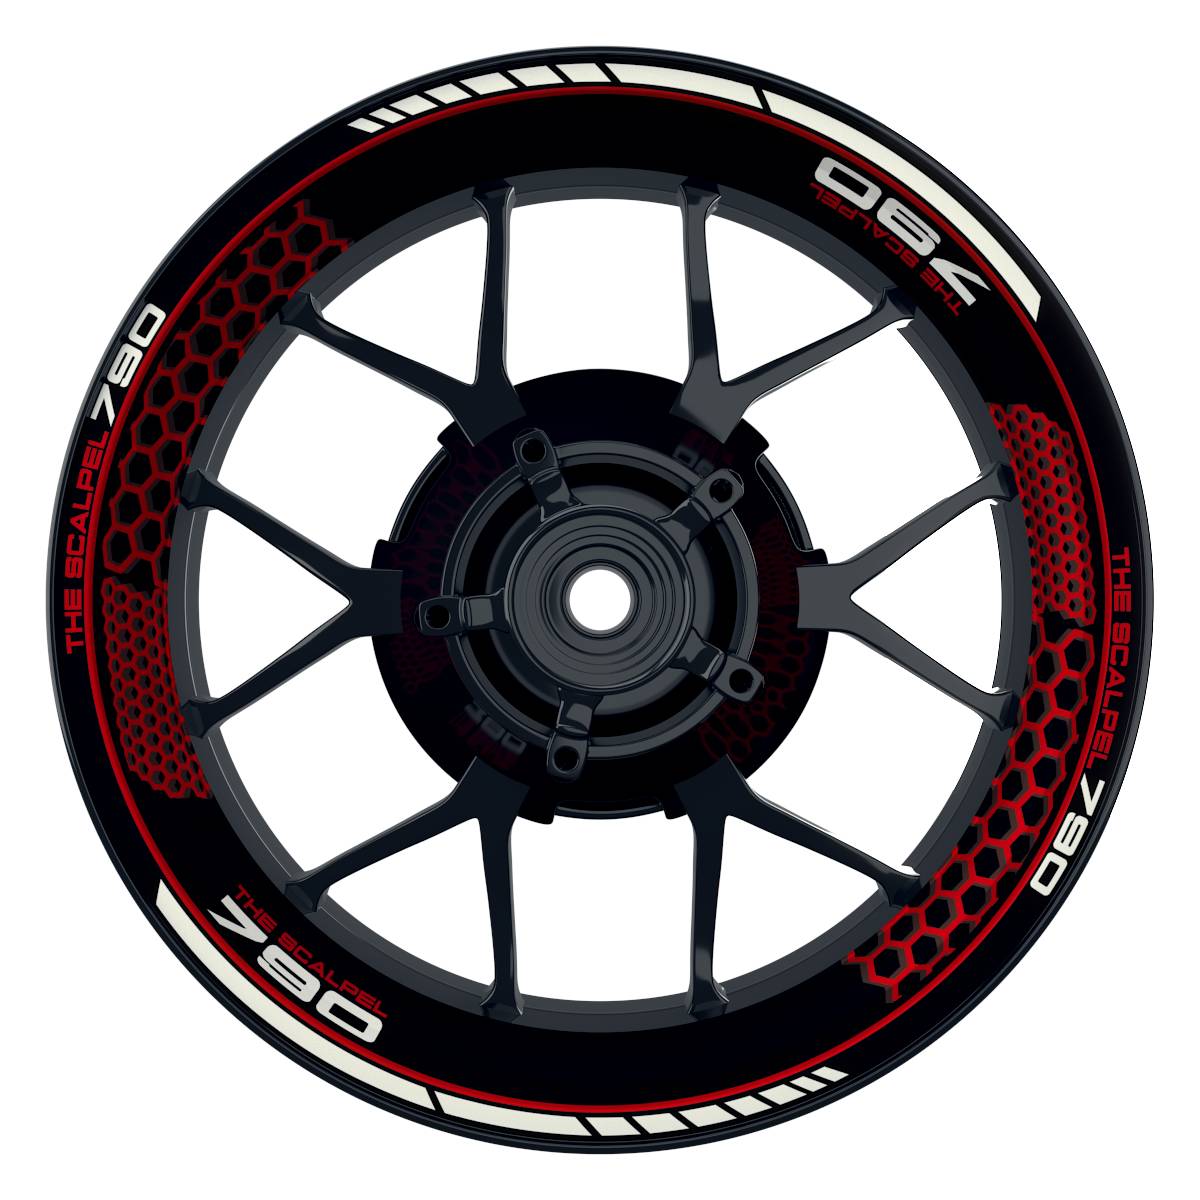 THE SCALPEL 790 Hexagon schwarz rot Wheelsticker Felgenaufkleber